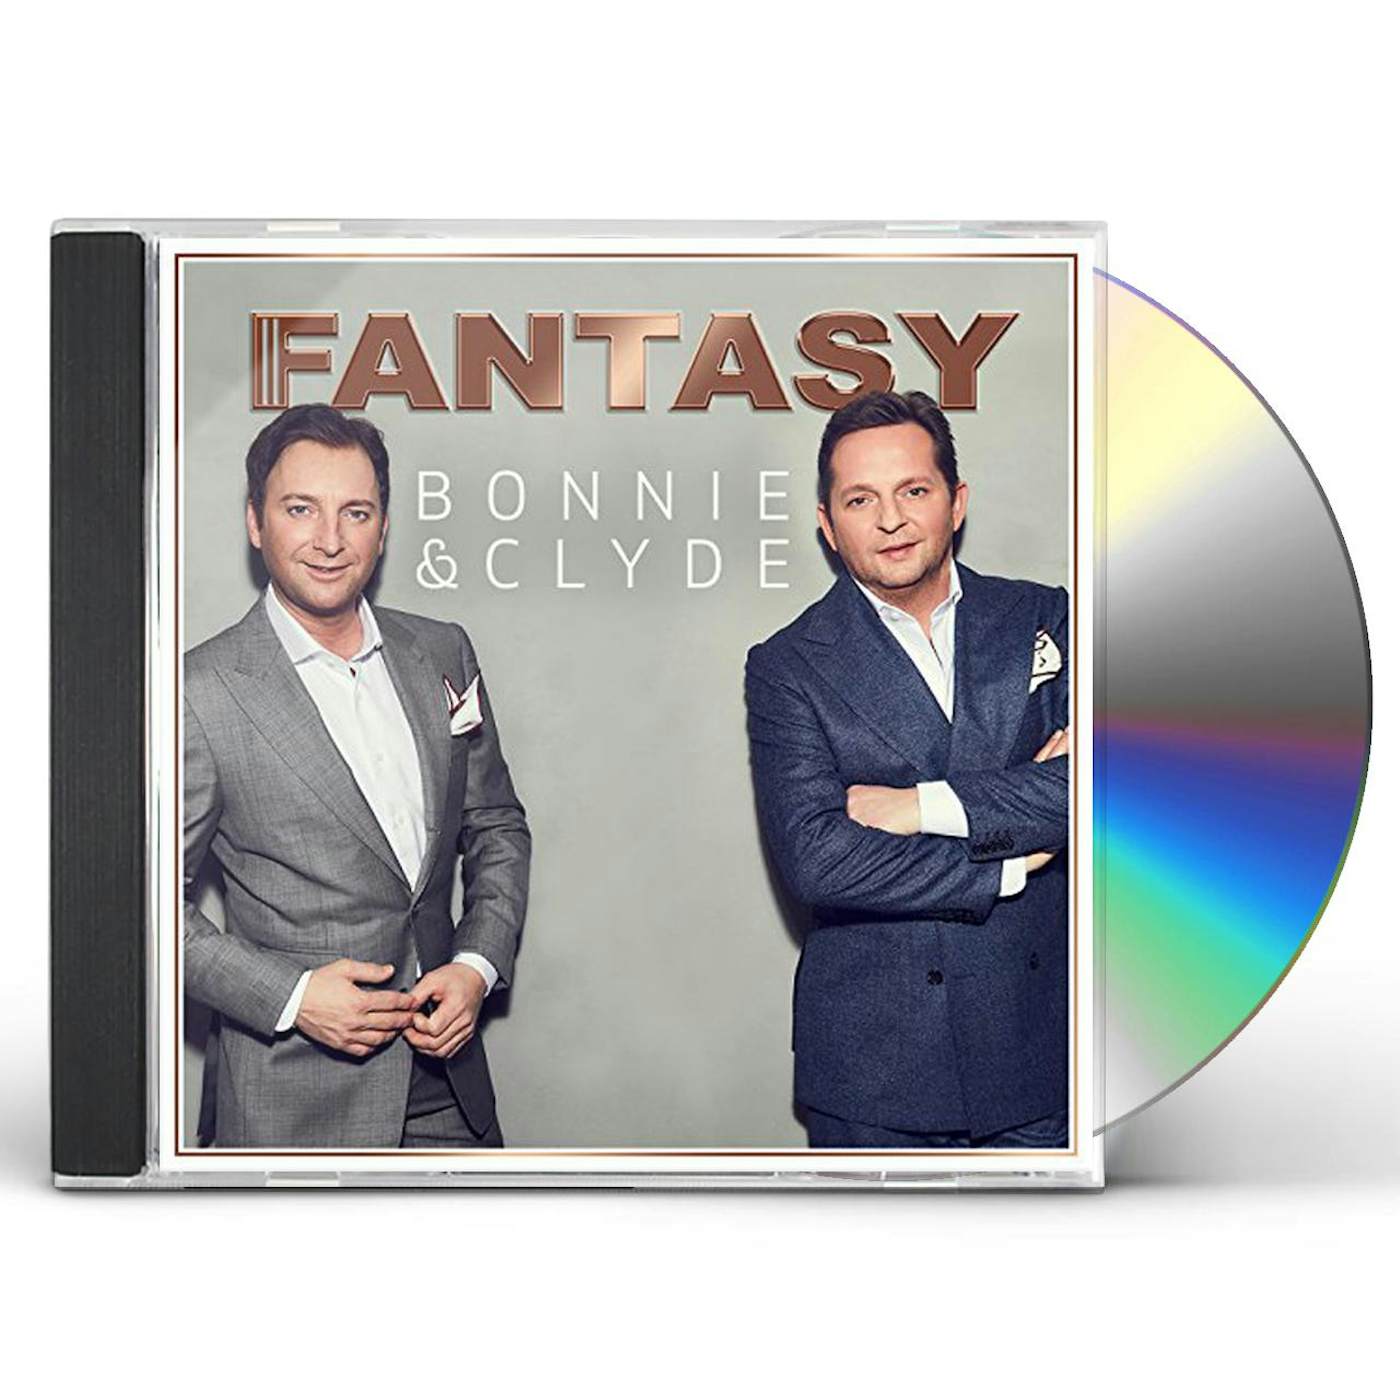 Fantasy BONNIE & CLYDE CD